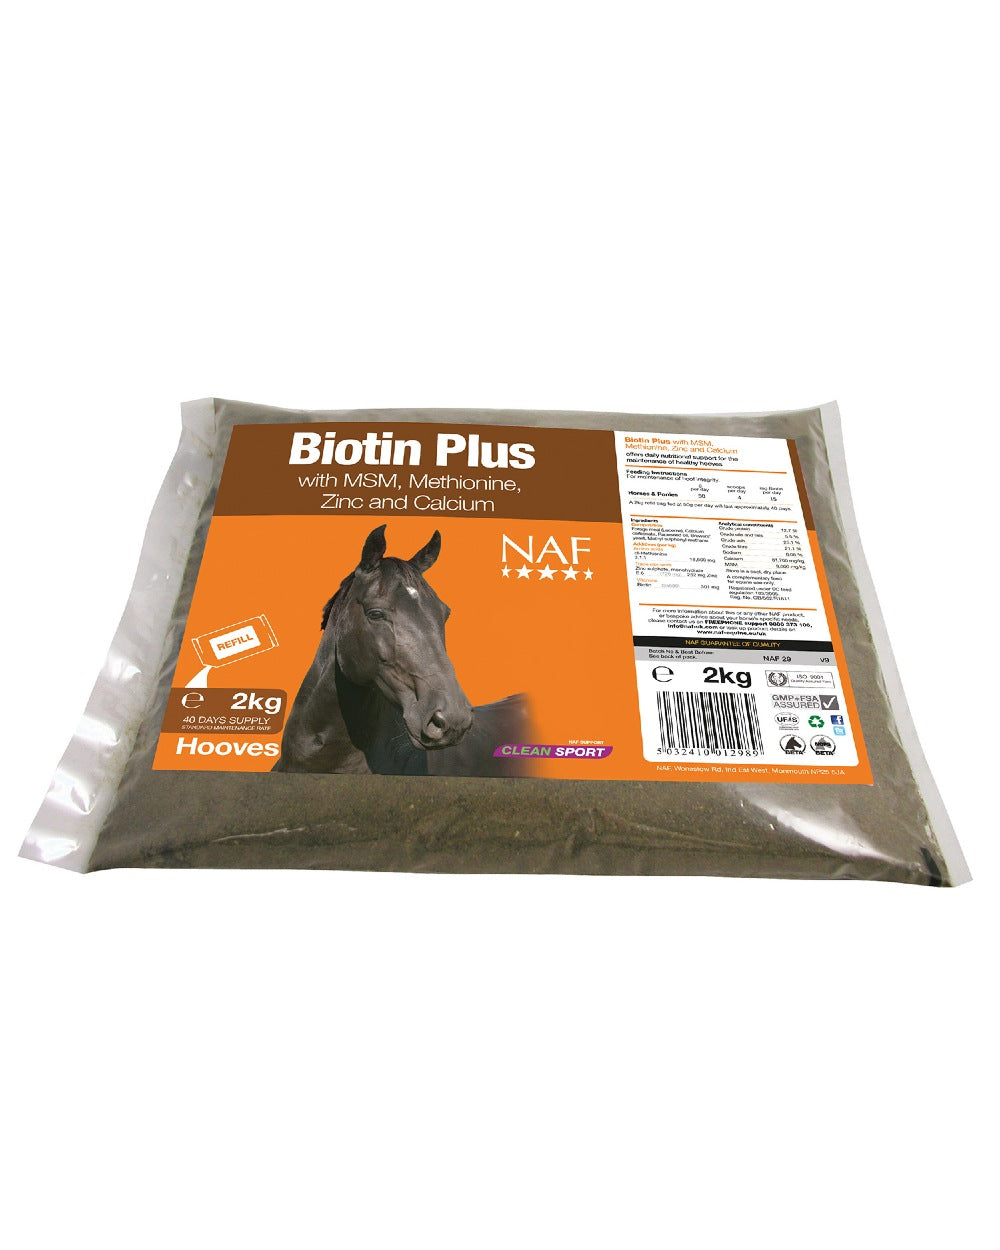 NAF Biotin Plus 2kg on white background